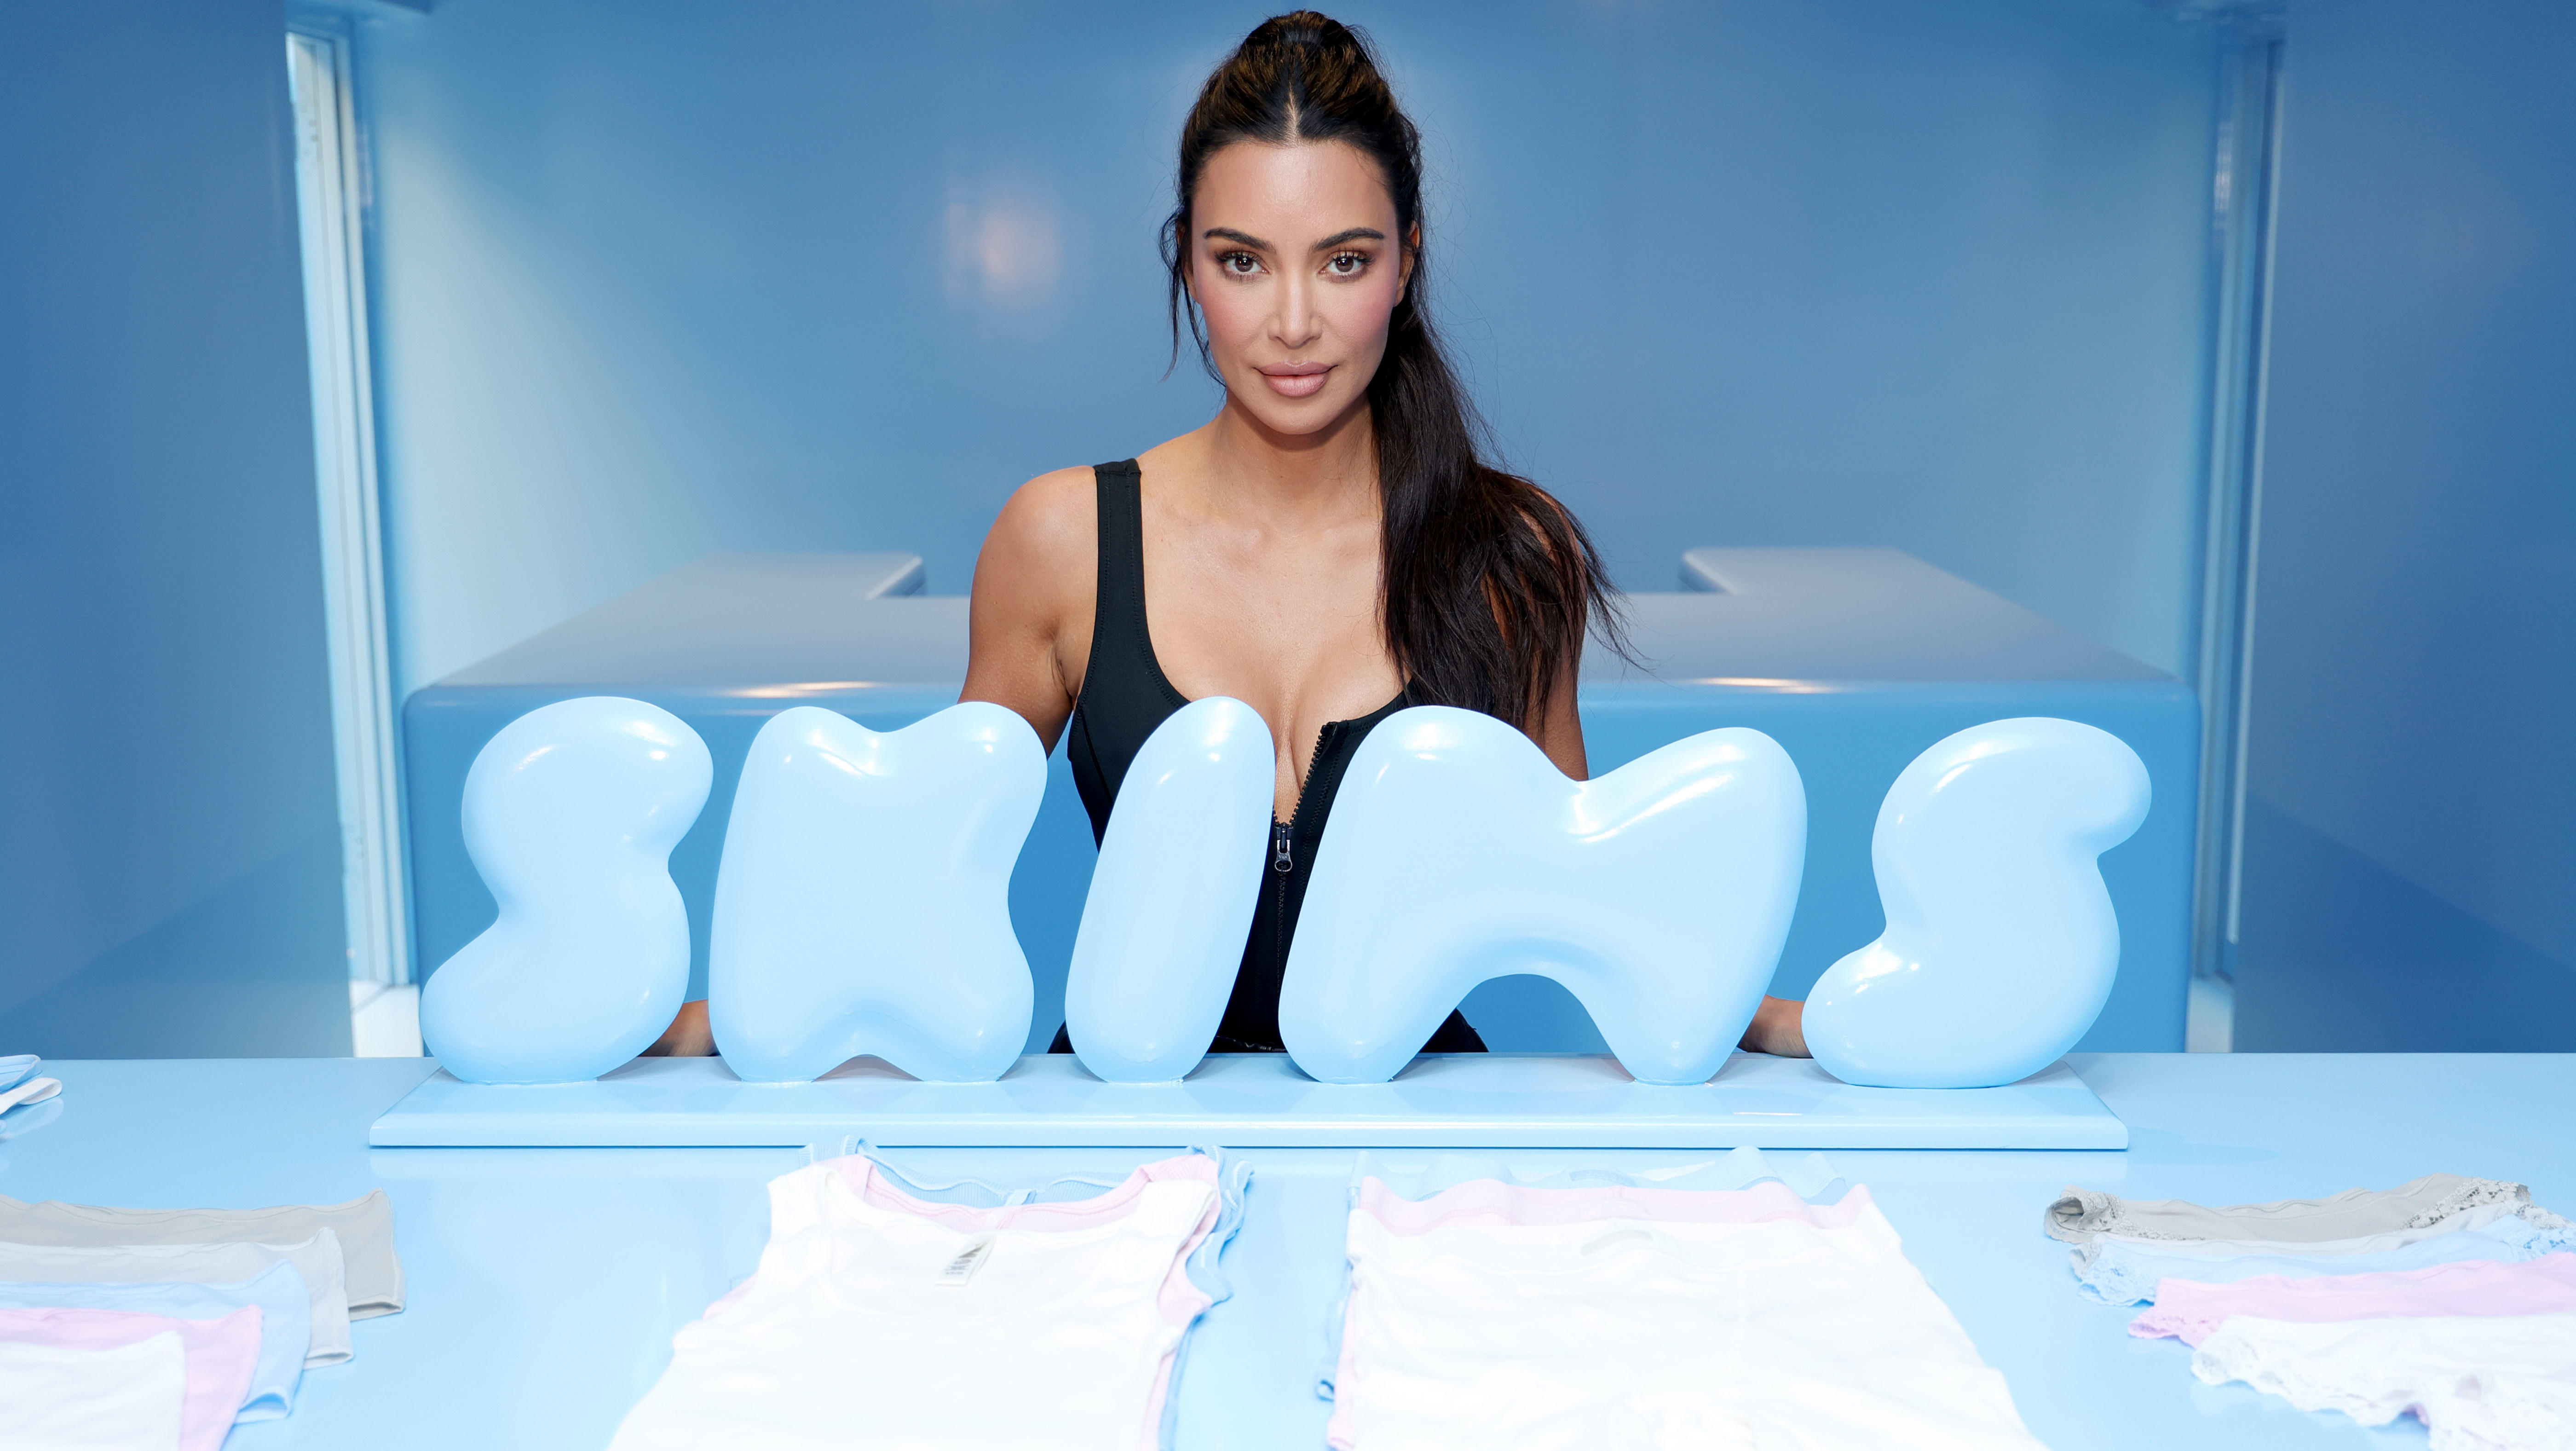 Kim Kardashian's Skims brand valued at $4 billion